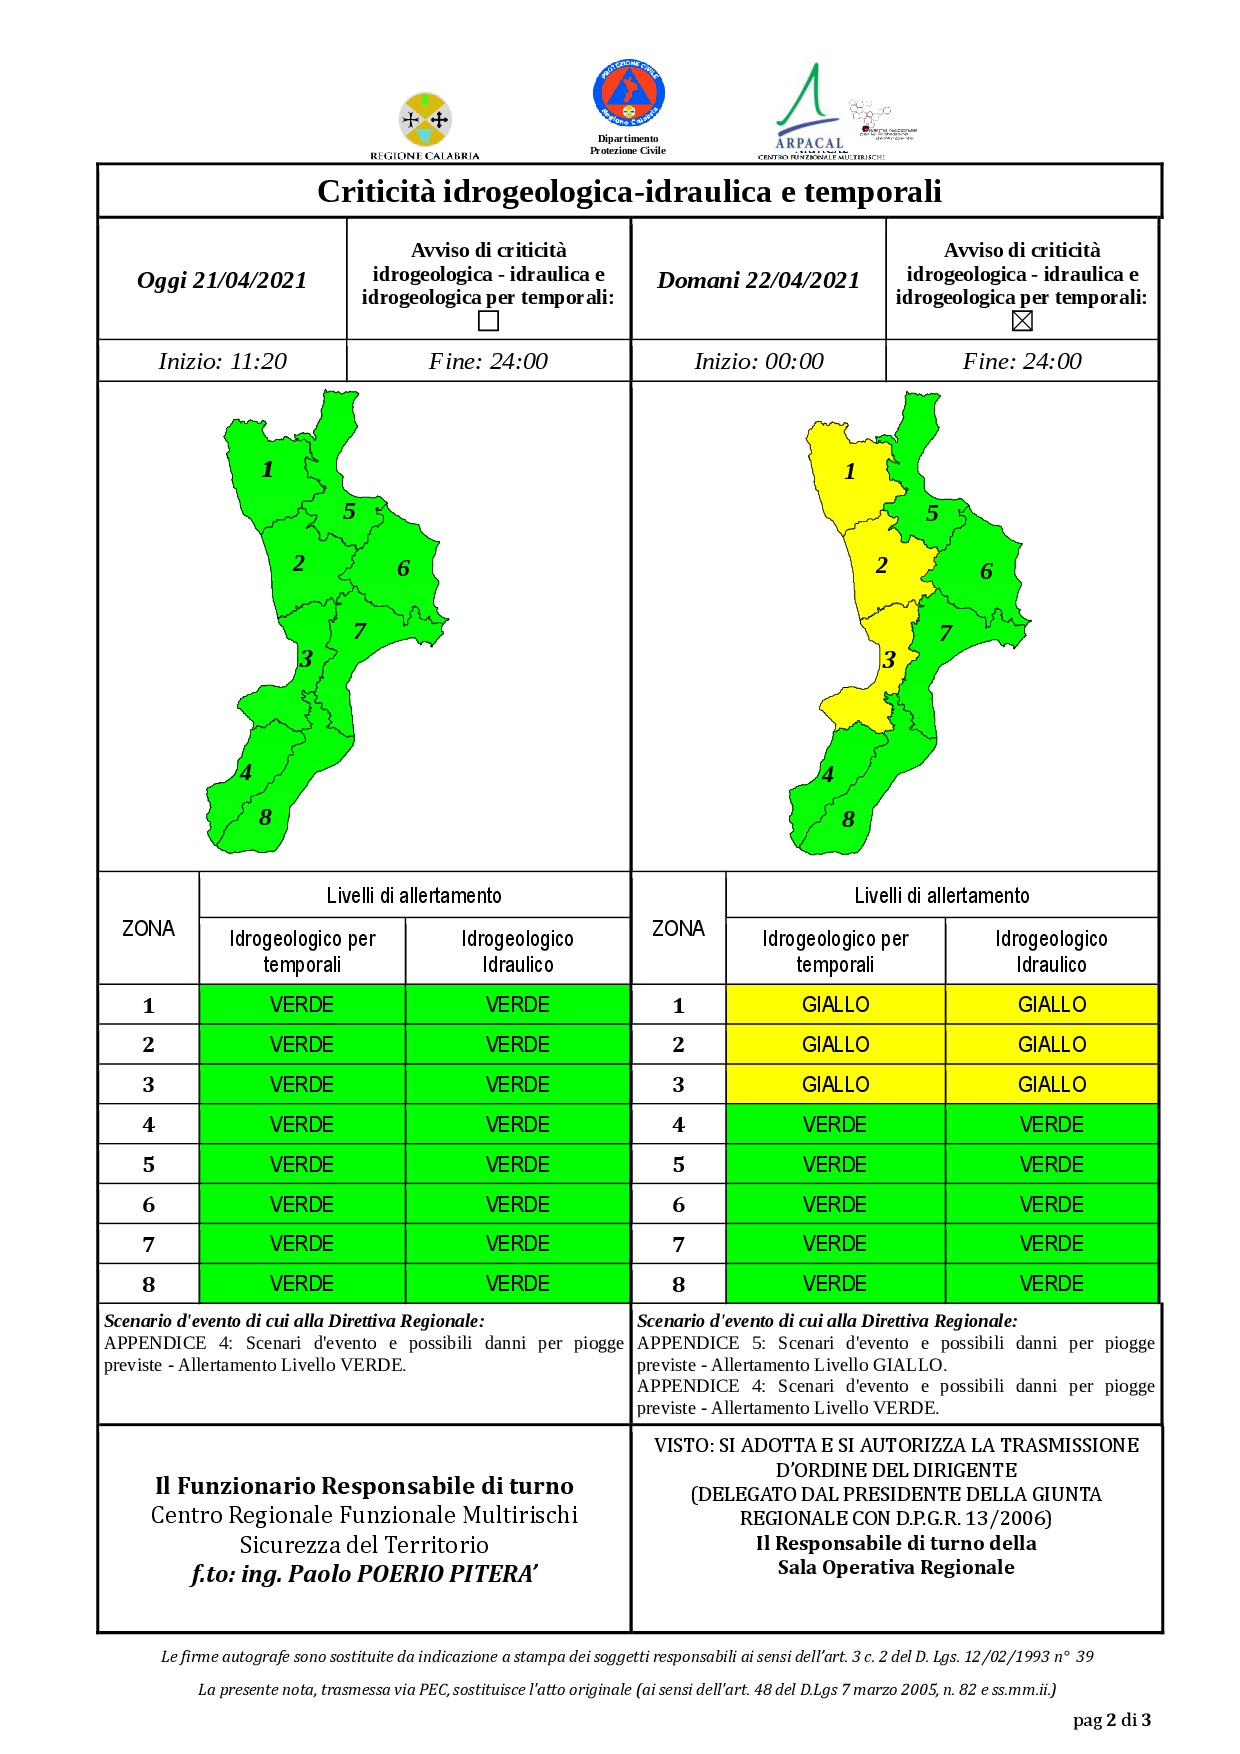 Criticità idrogeologica-idraulica e temporali in Calabria 21-04-2021